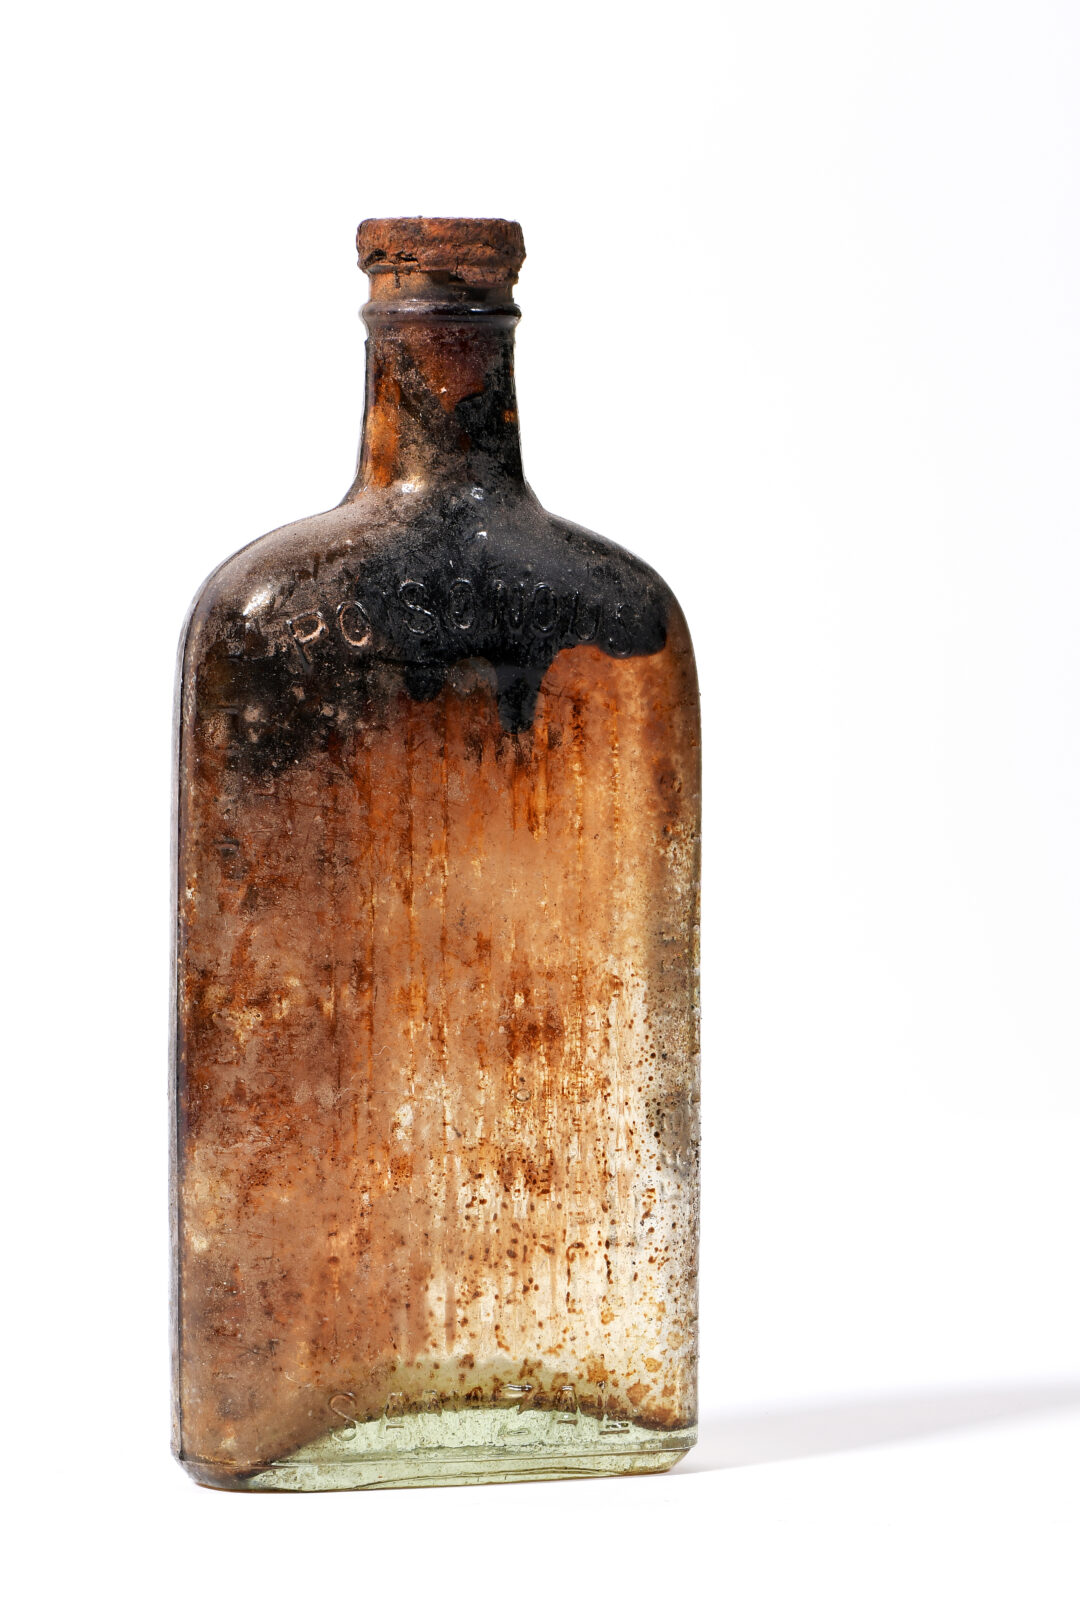 Hestercombe Collections Poison bottle Credit Jon England